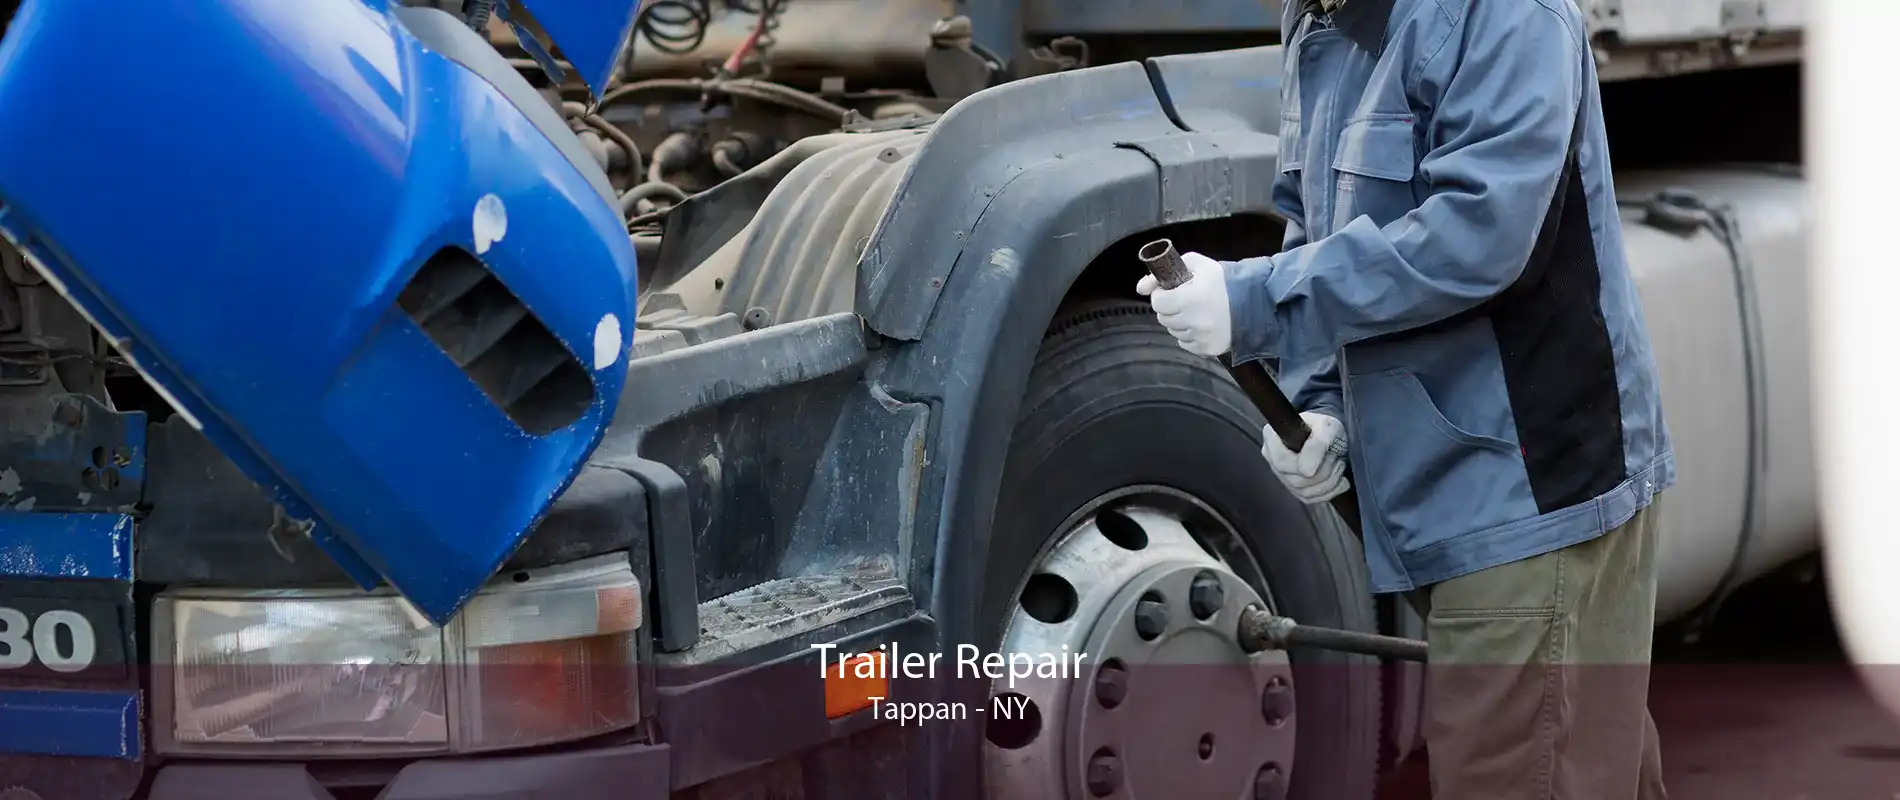 Trailer Repair Tappan - NY